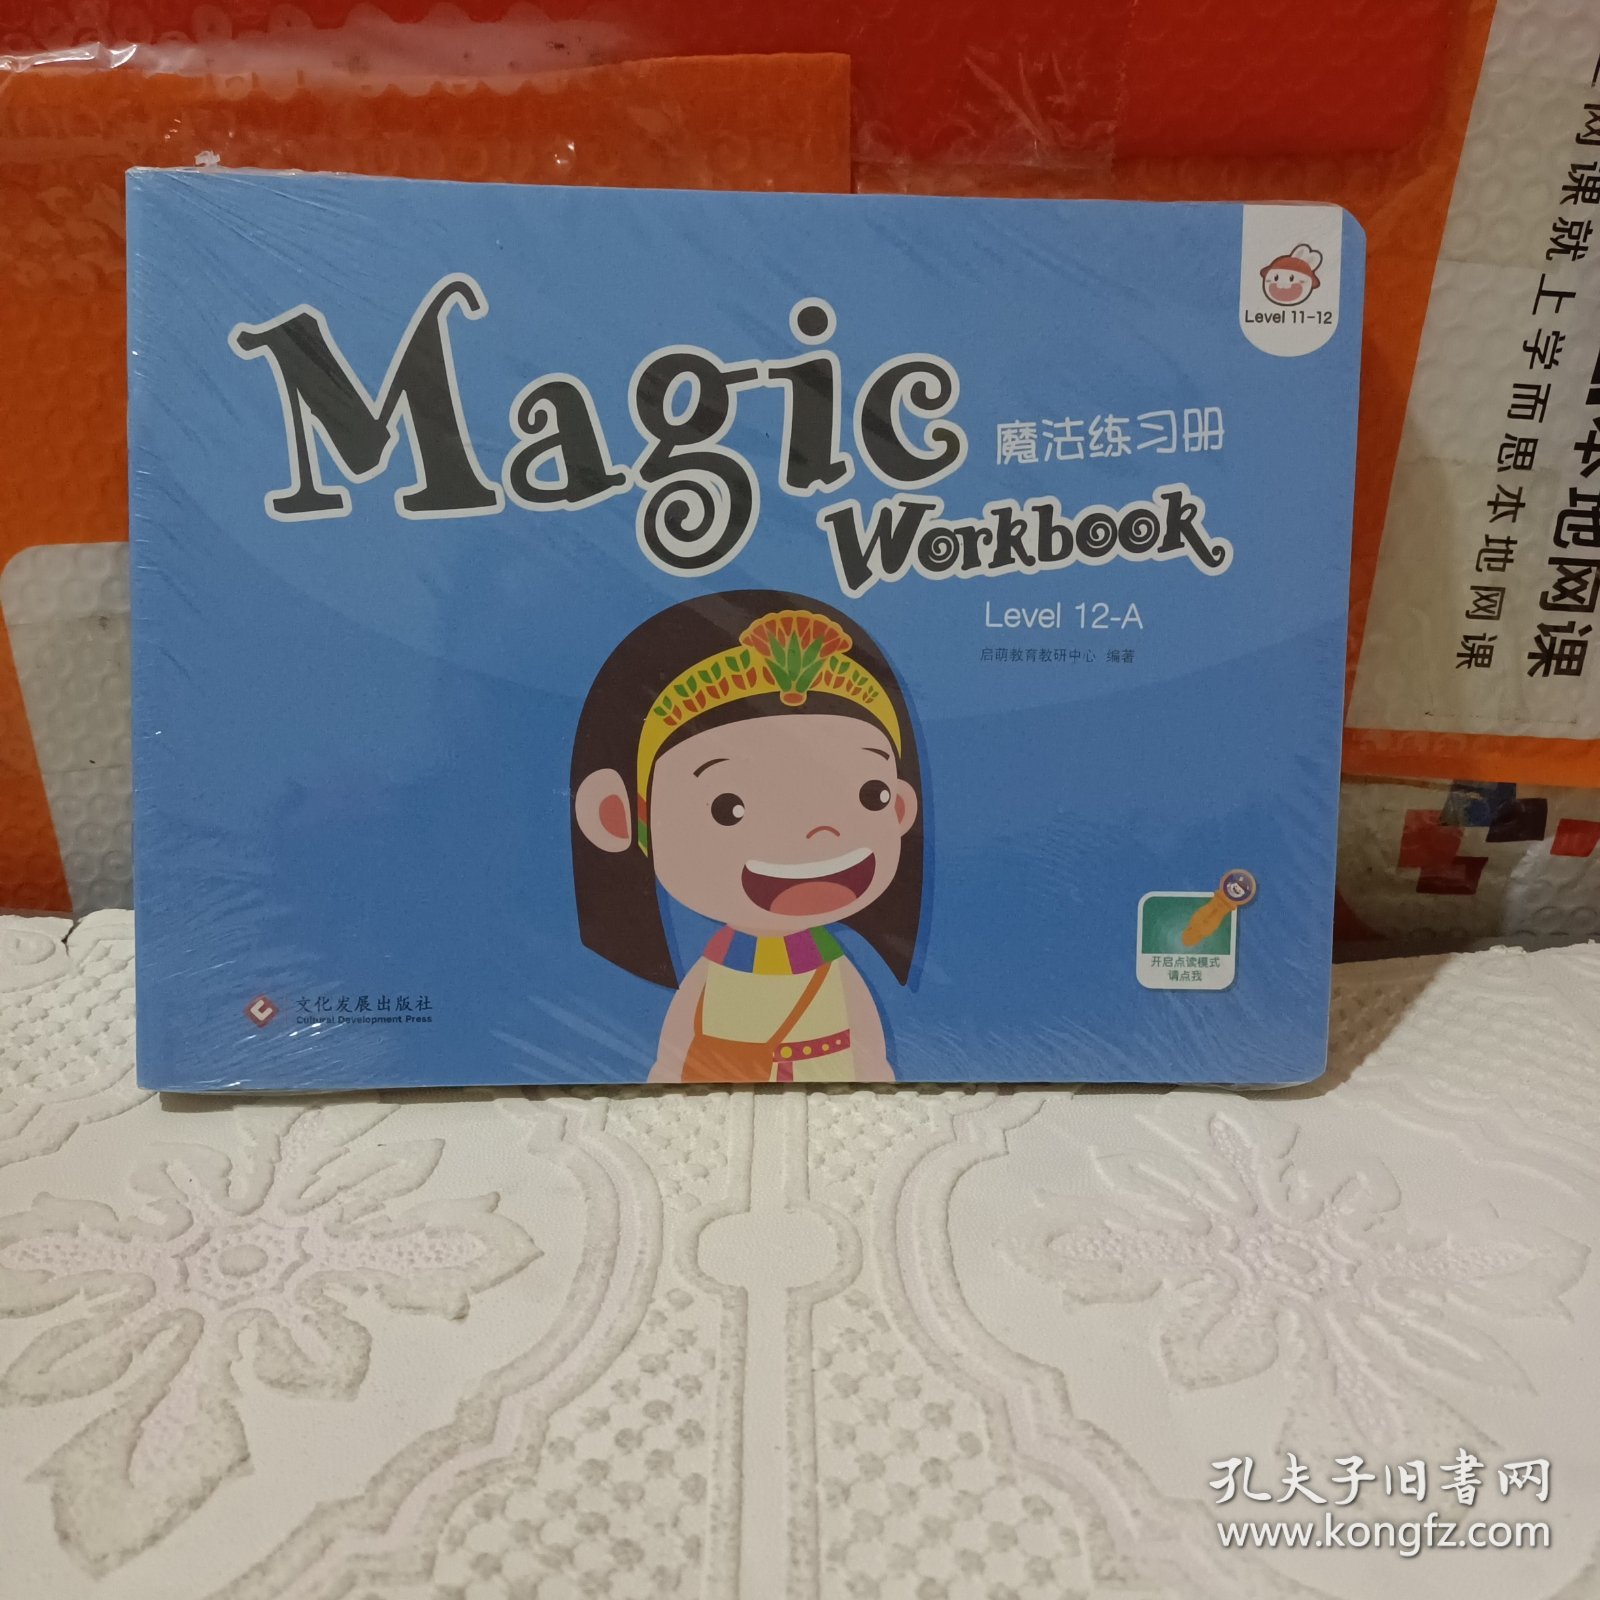 magic workbook 魔法练习册 level 12-A（全10册）全新未拆封